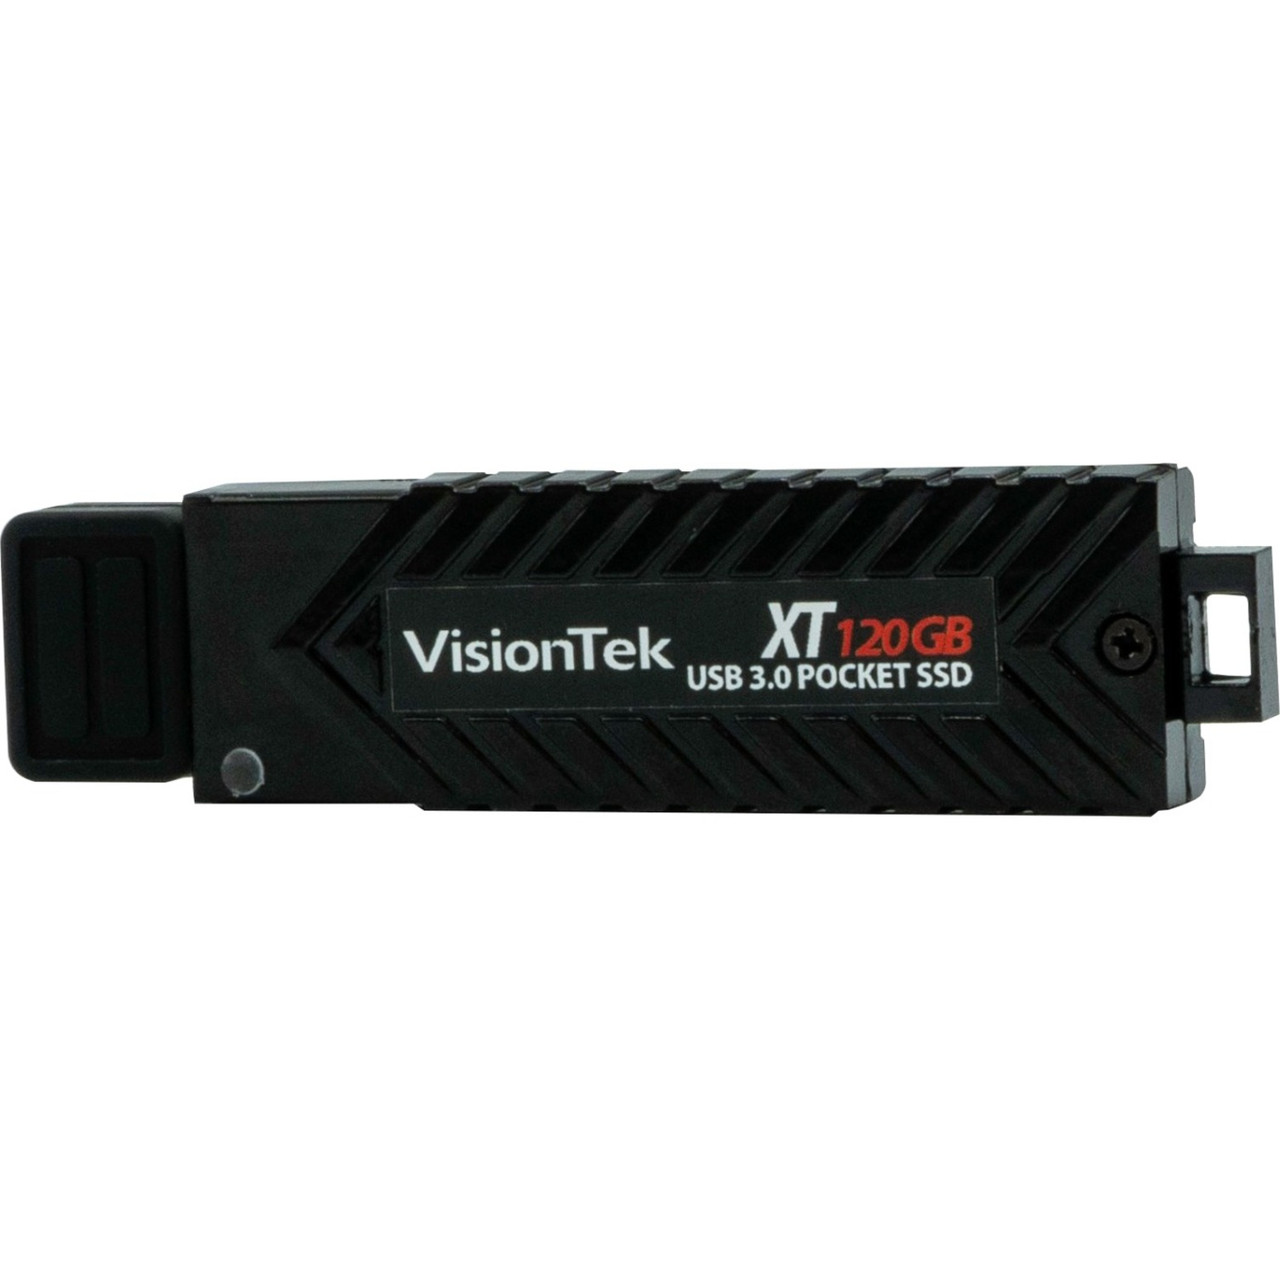 VisionTek 120GB XT USB 3.0 Pocket Solid State Drive - 901238